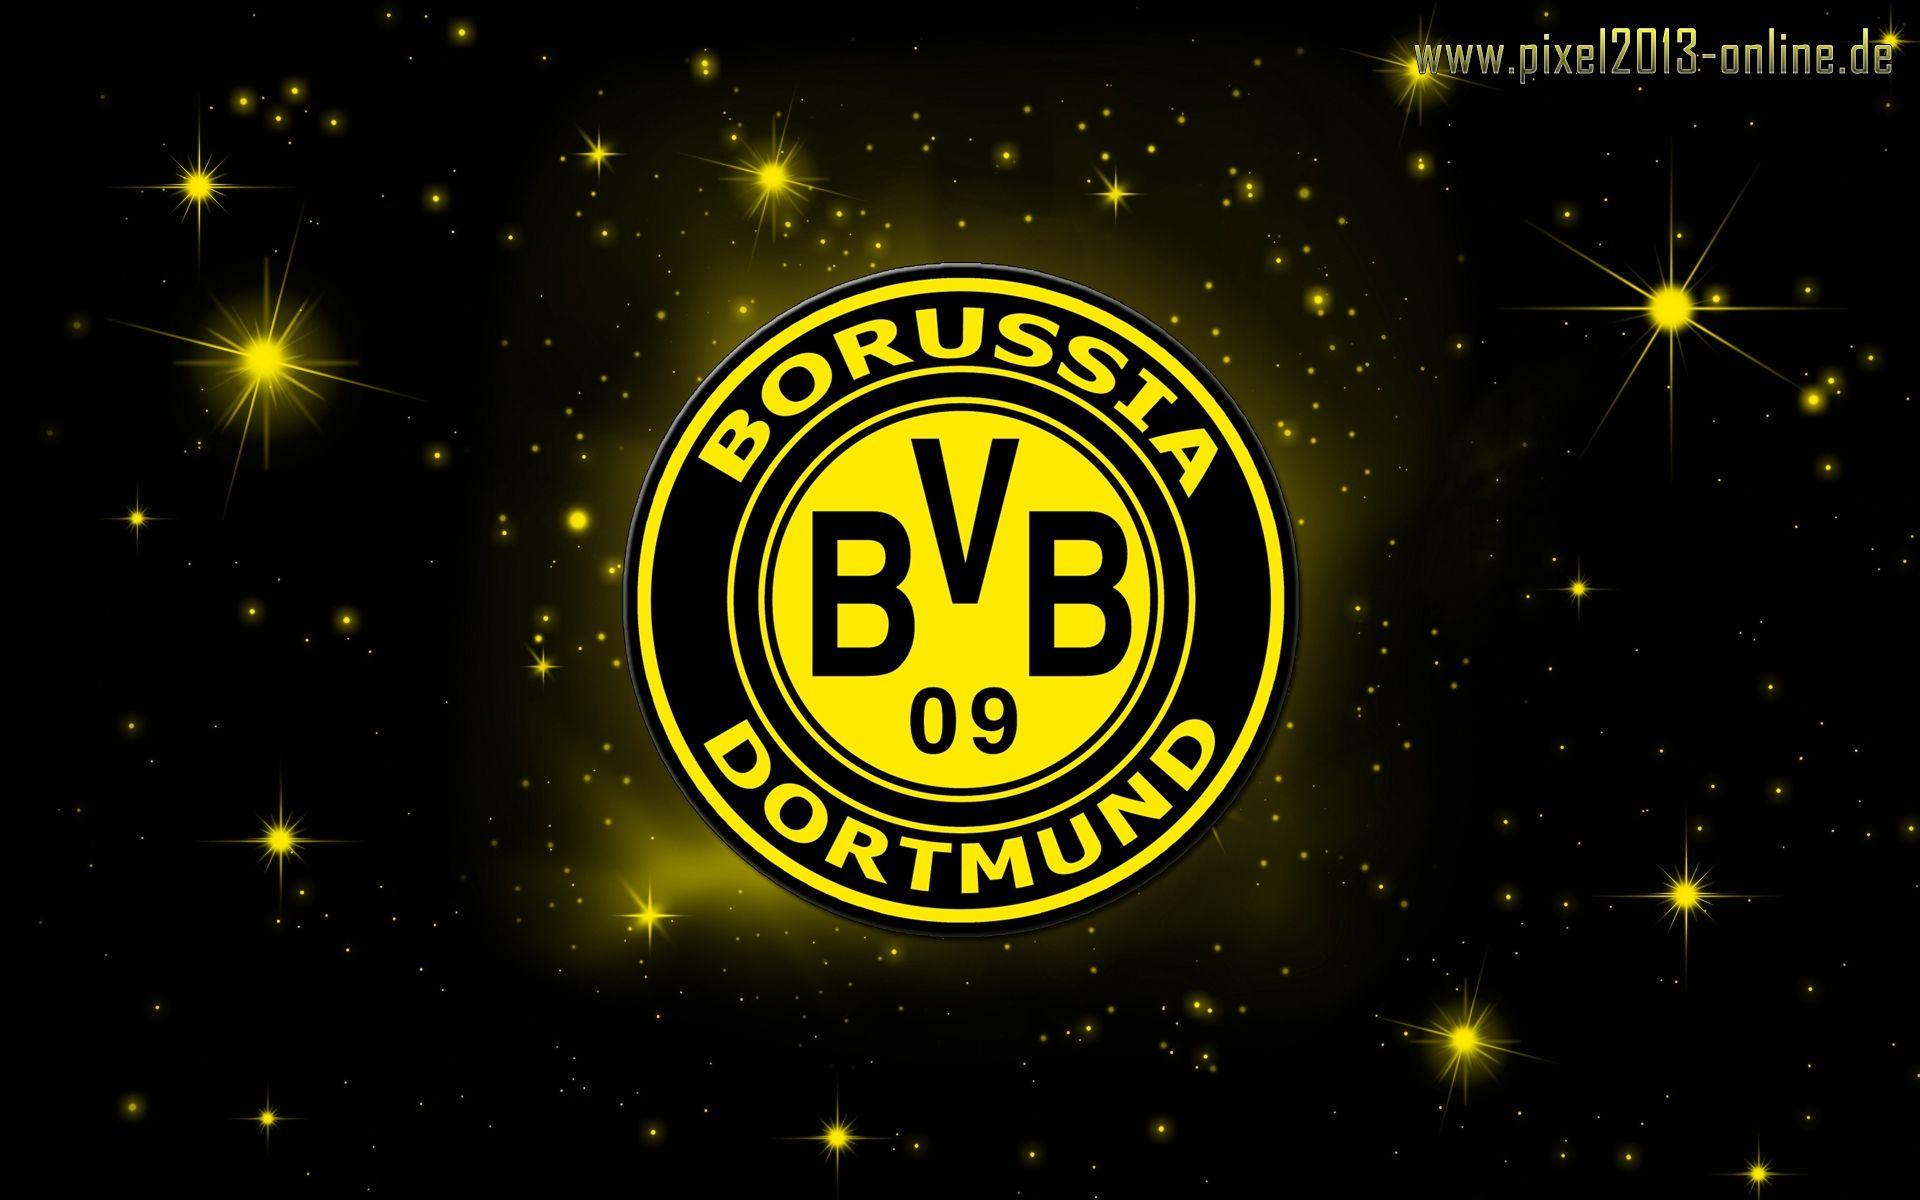 Dortmund Logo - Borussia Dortmund Football Club Logo Picture #5678 - Ongur